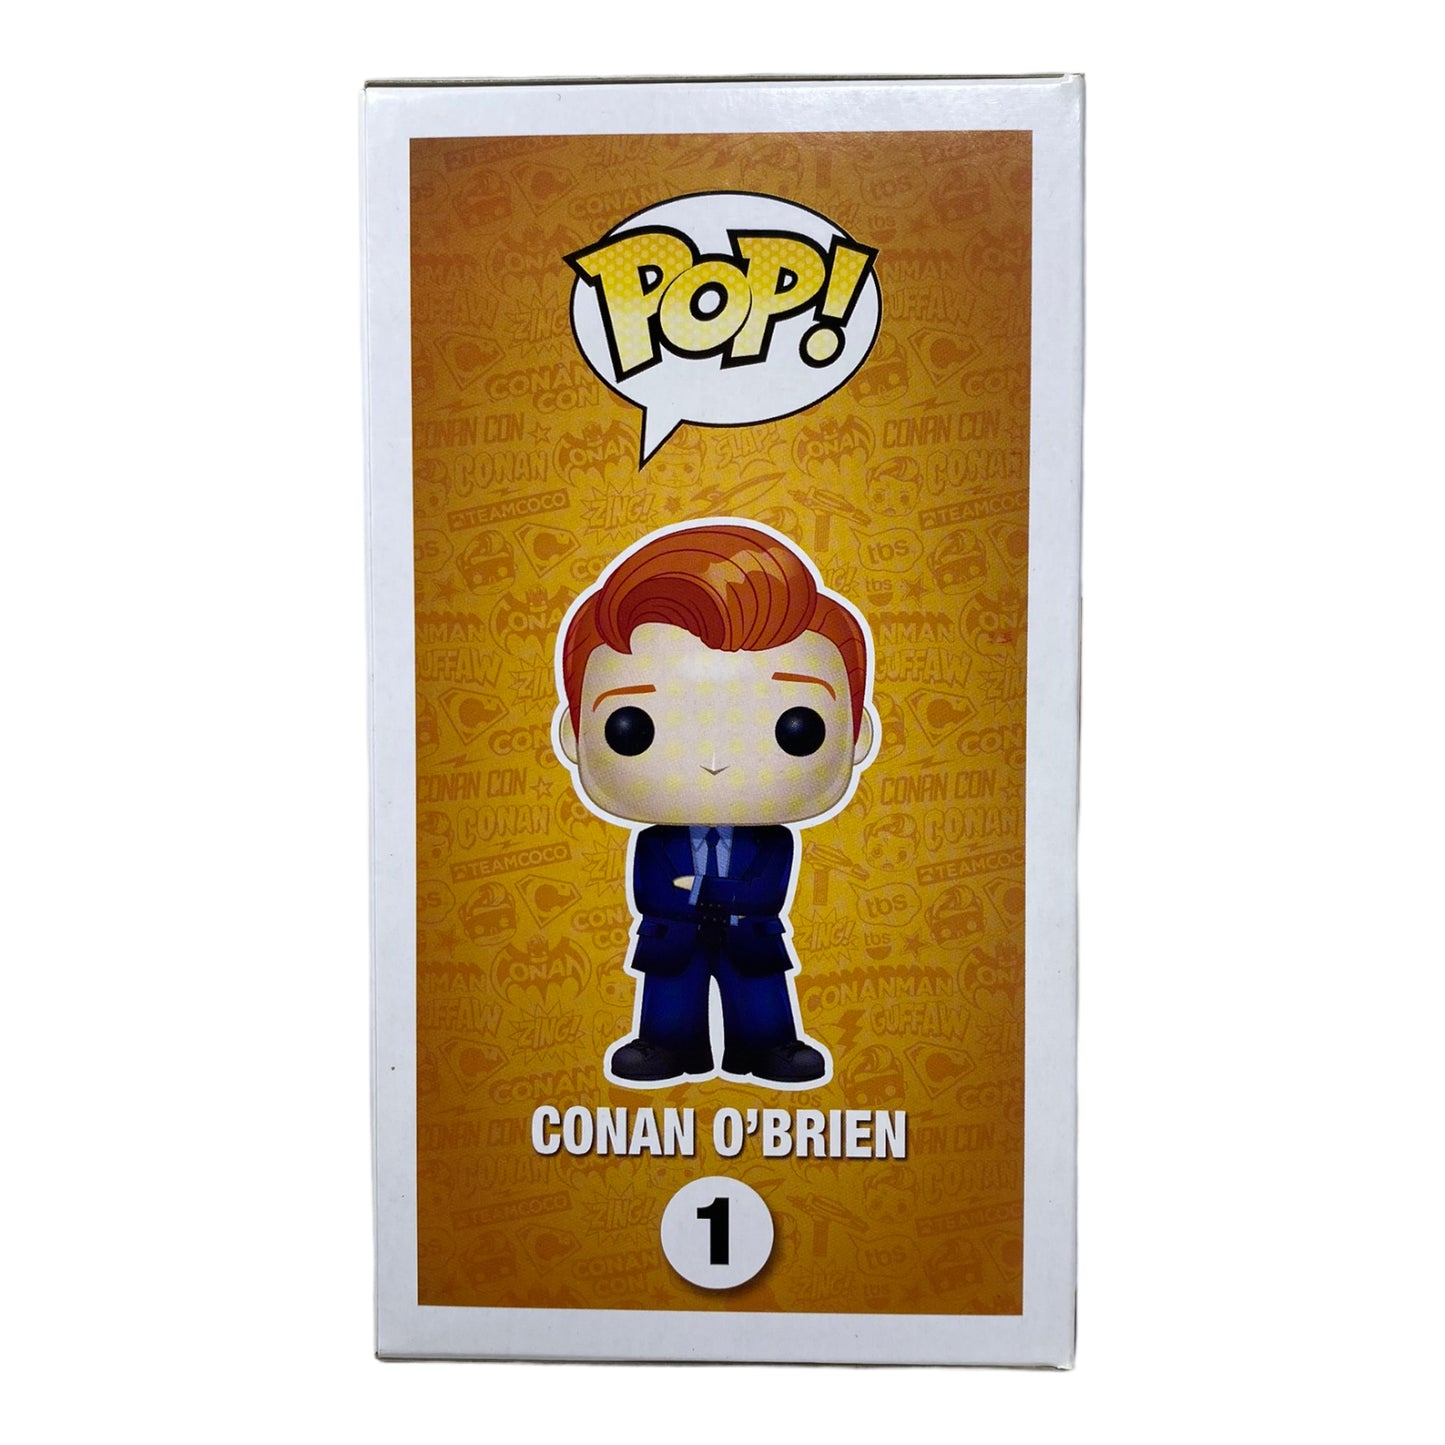 2015 Conan O’Brien 1, SDCC International